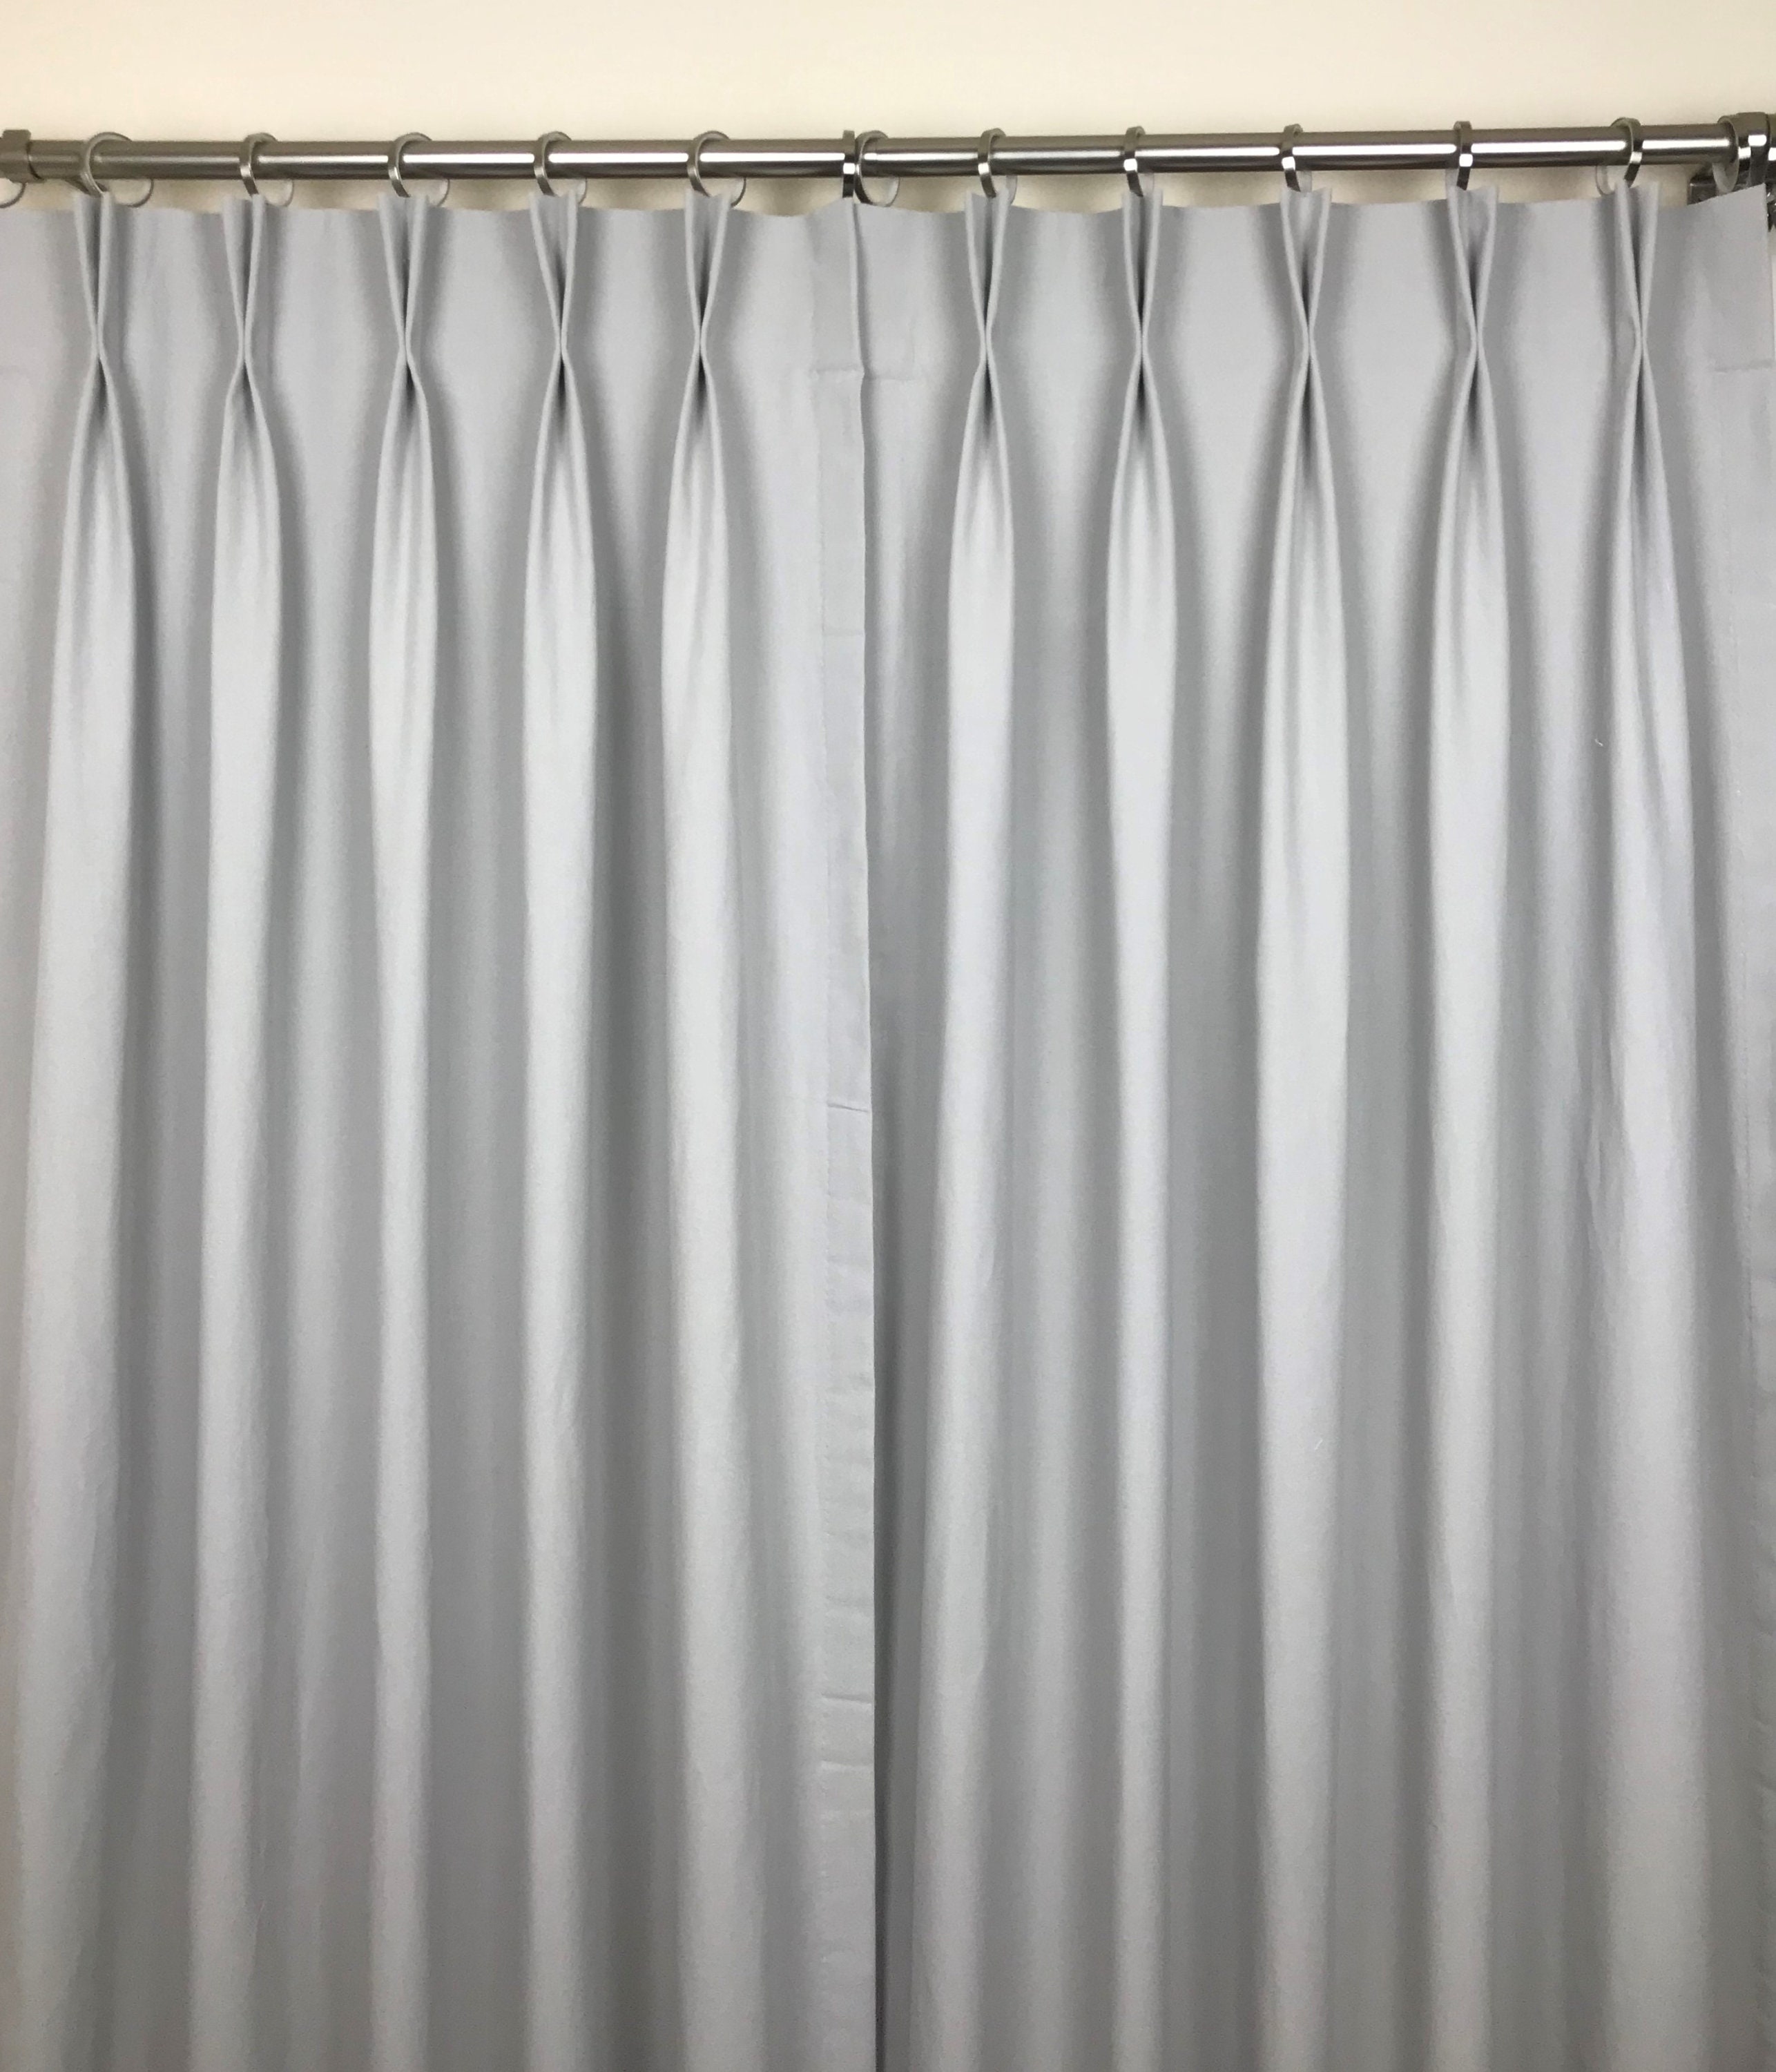 Grey Pencil Pleat Curtains Hamilton McBride Hotel Collection Sateen 65x72 1221 